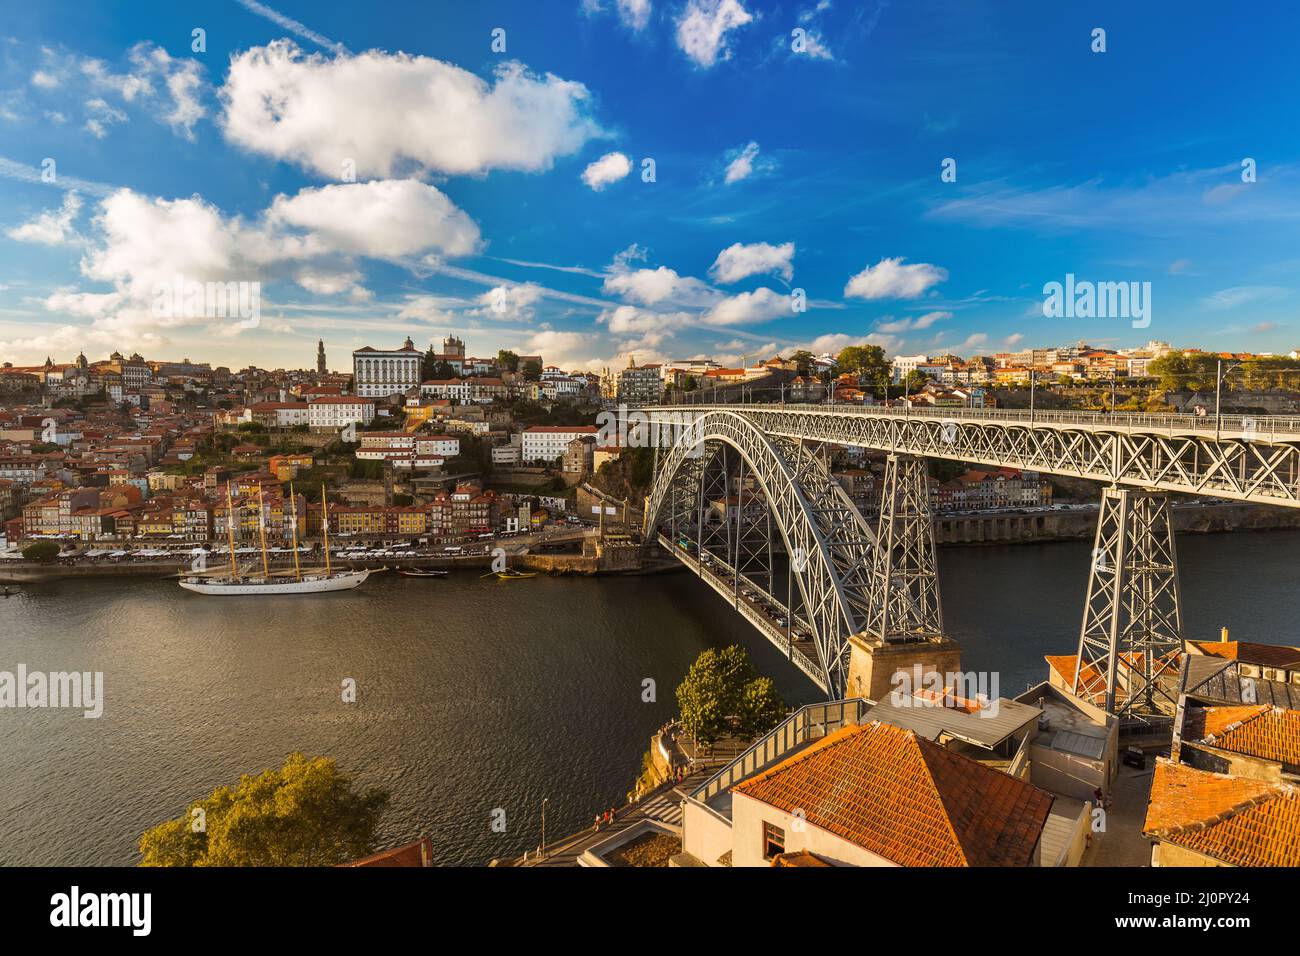 Porto old town - Portugal Stock Photo